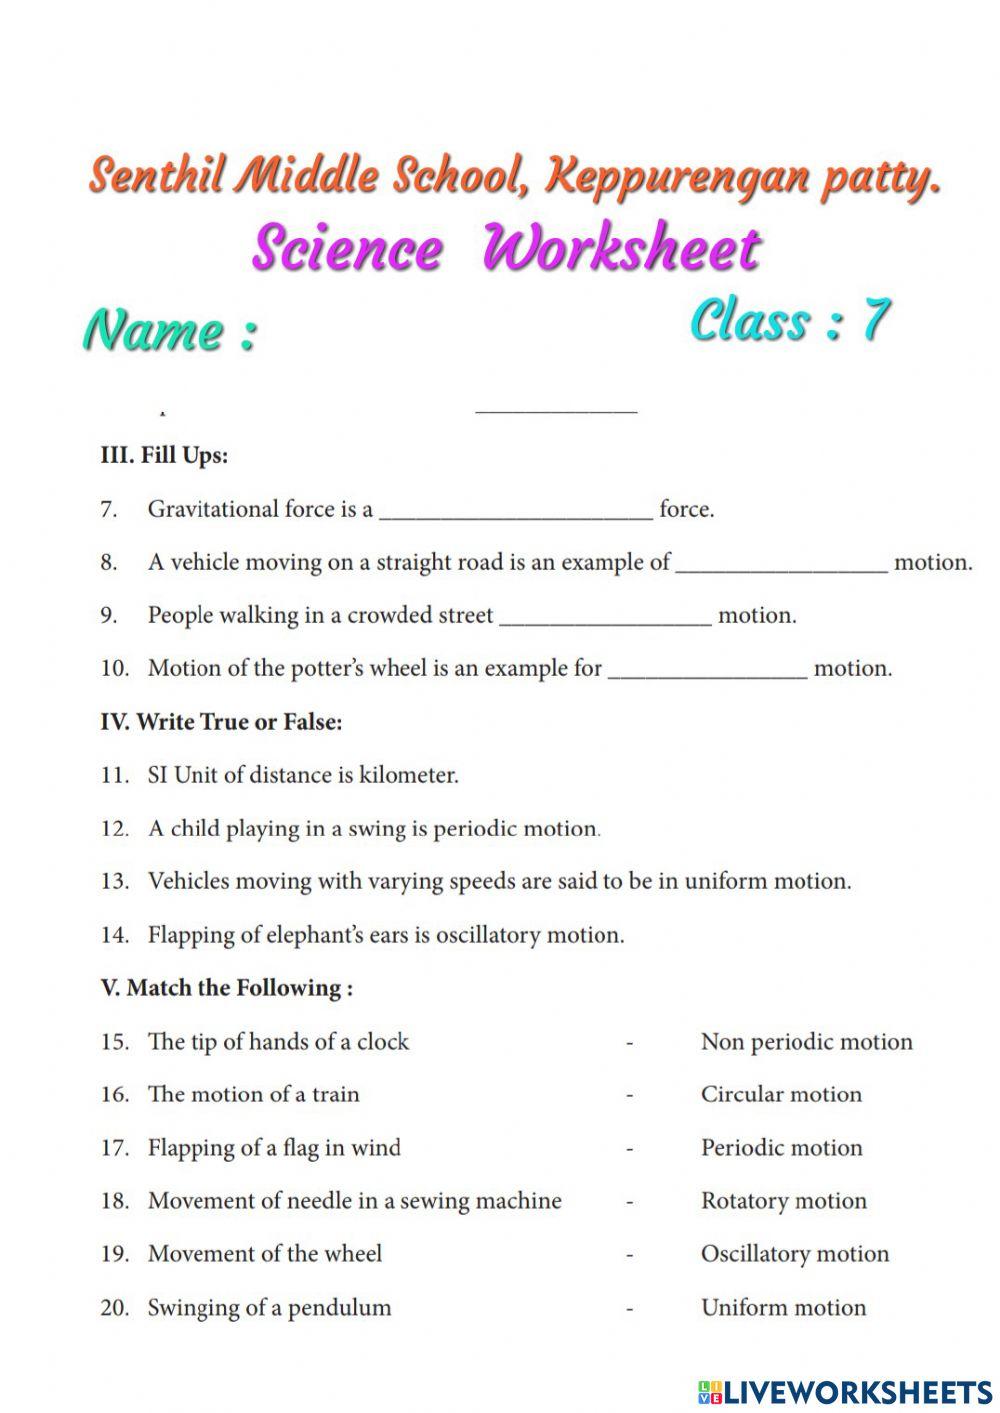 Senthil middle school,keppurengan patty,:class:7 science worksheet- prepared by R.Kumanan,. Sec.Gr.Tr.